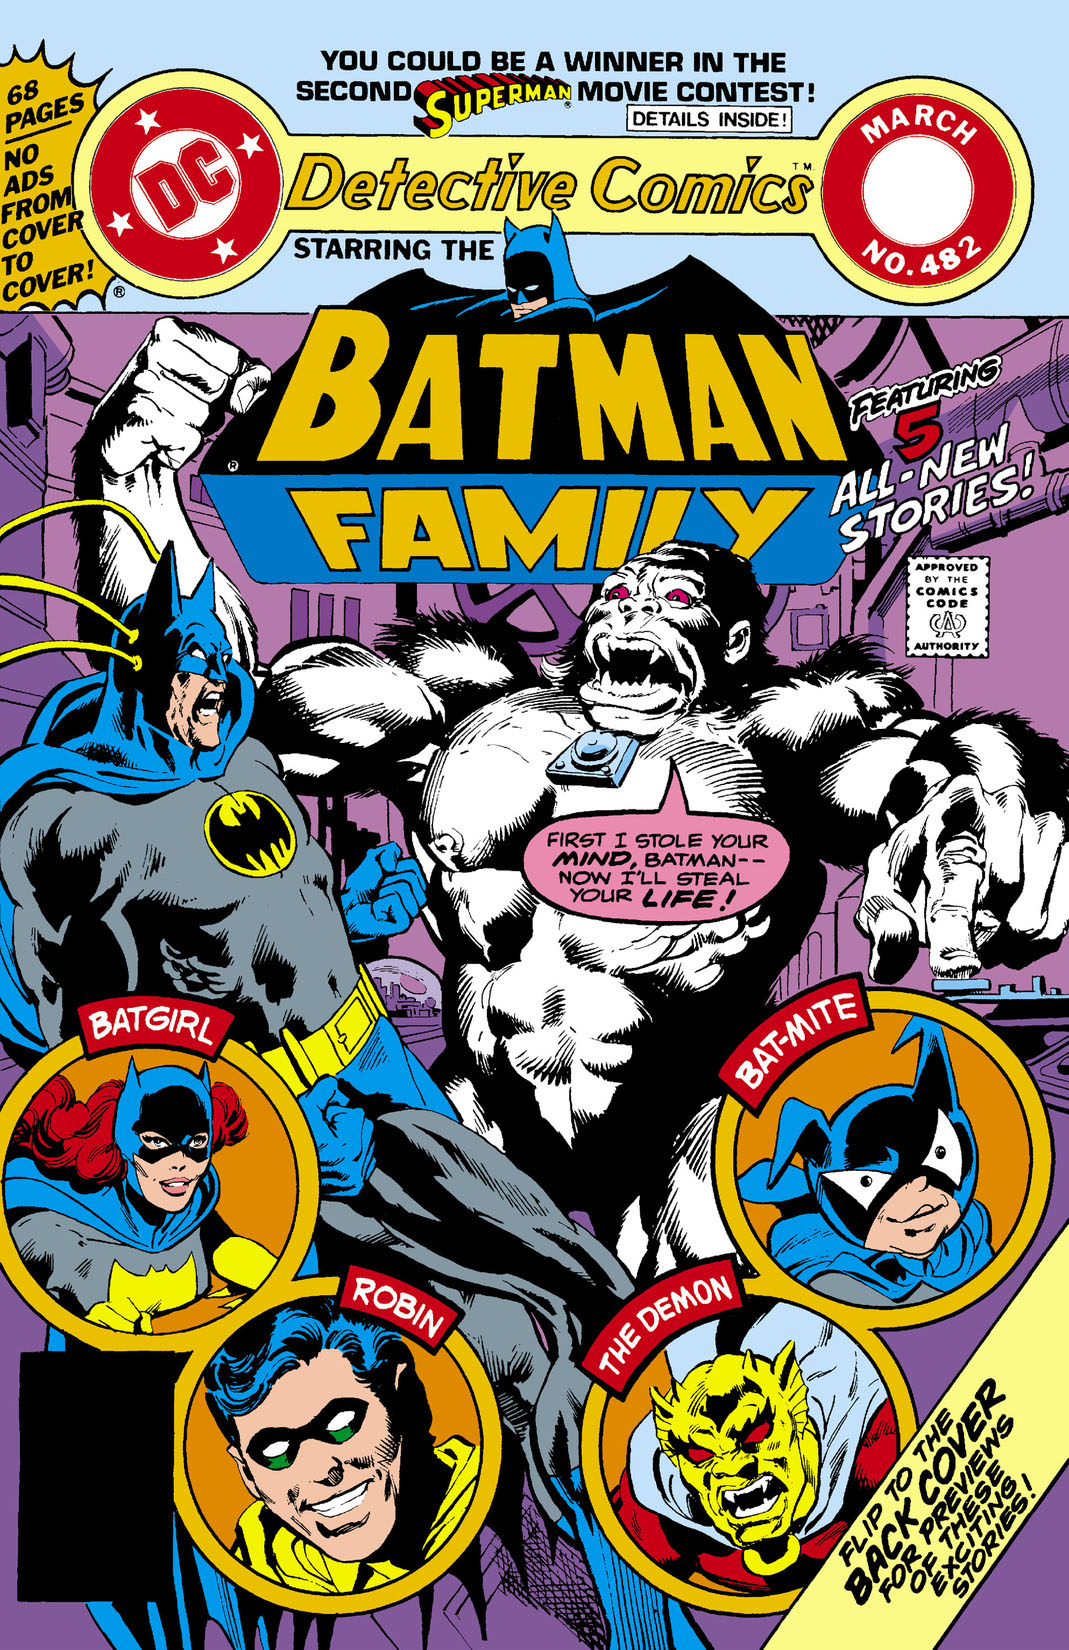 Detective Comics (1937-) #482 preview images